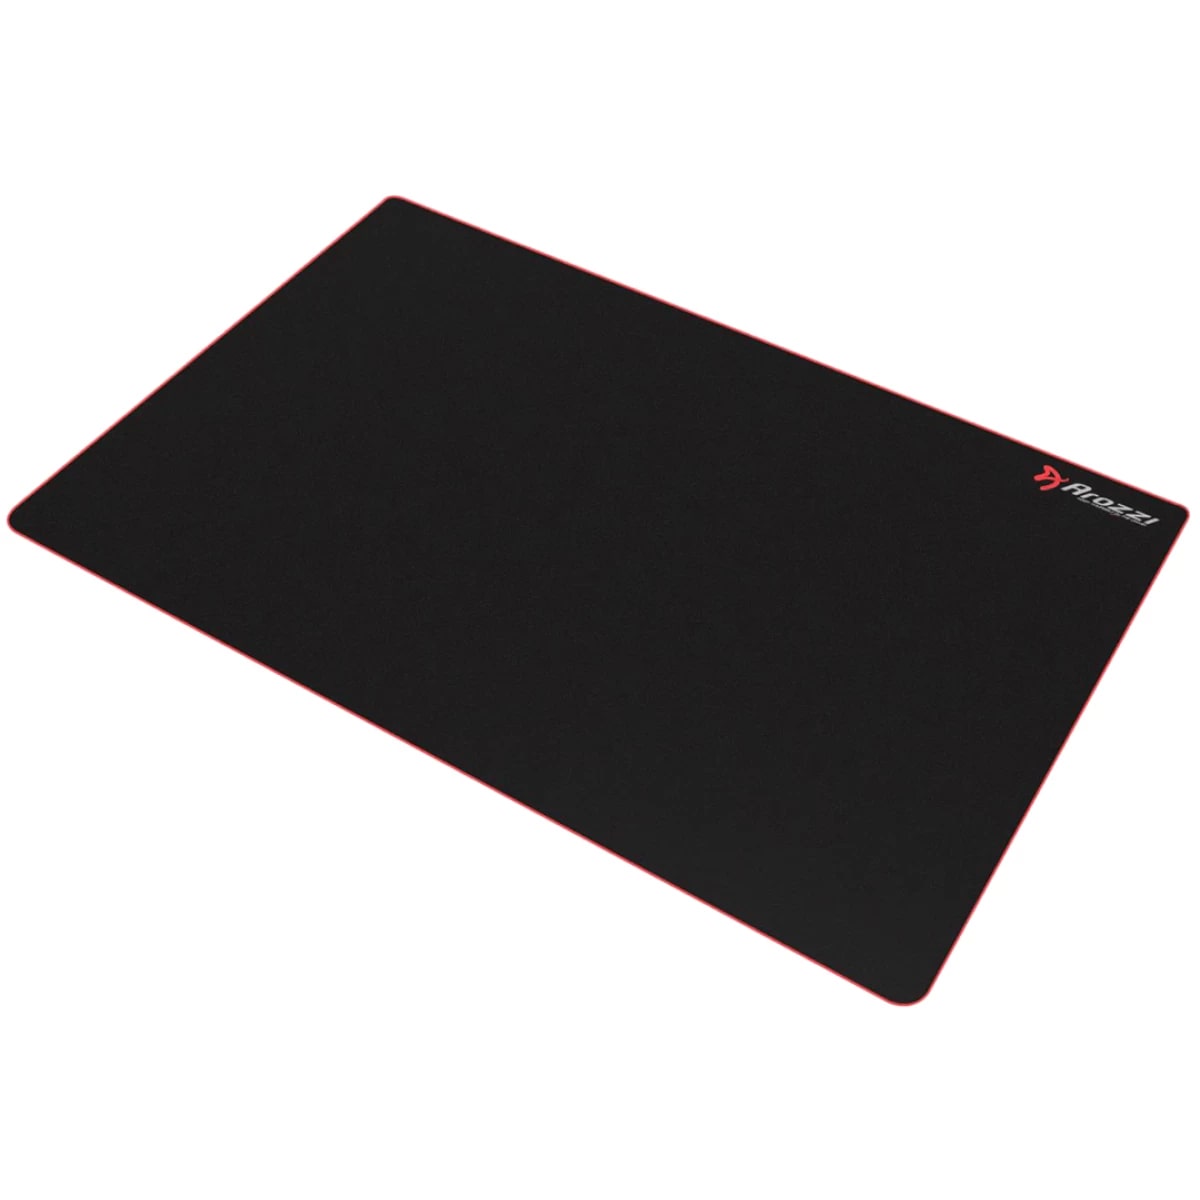 Arena Leggero Anti-Slip Waterproof Machine Washable Mouse Pad - Black and Red